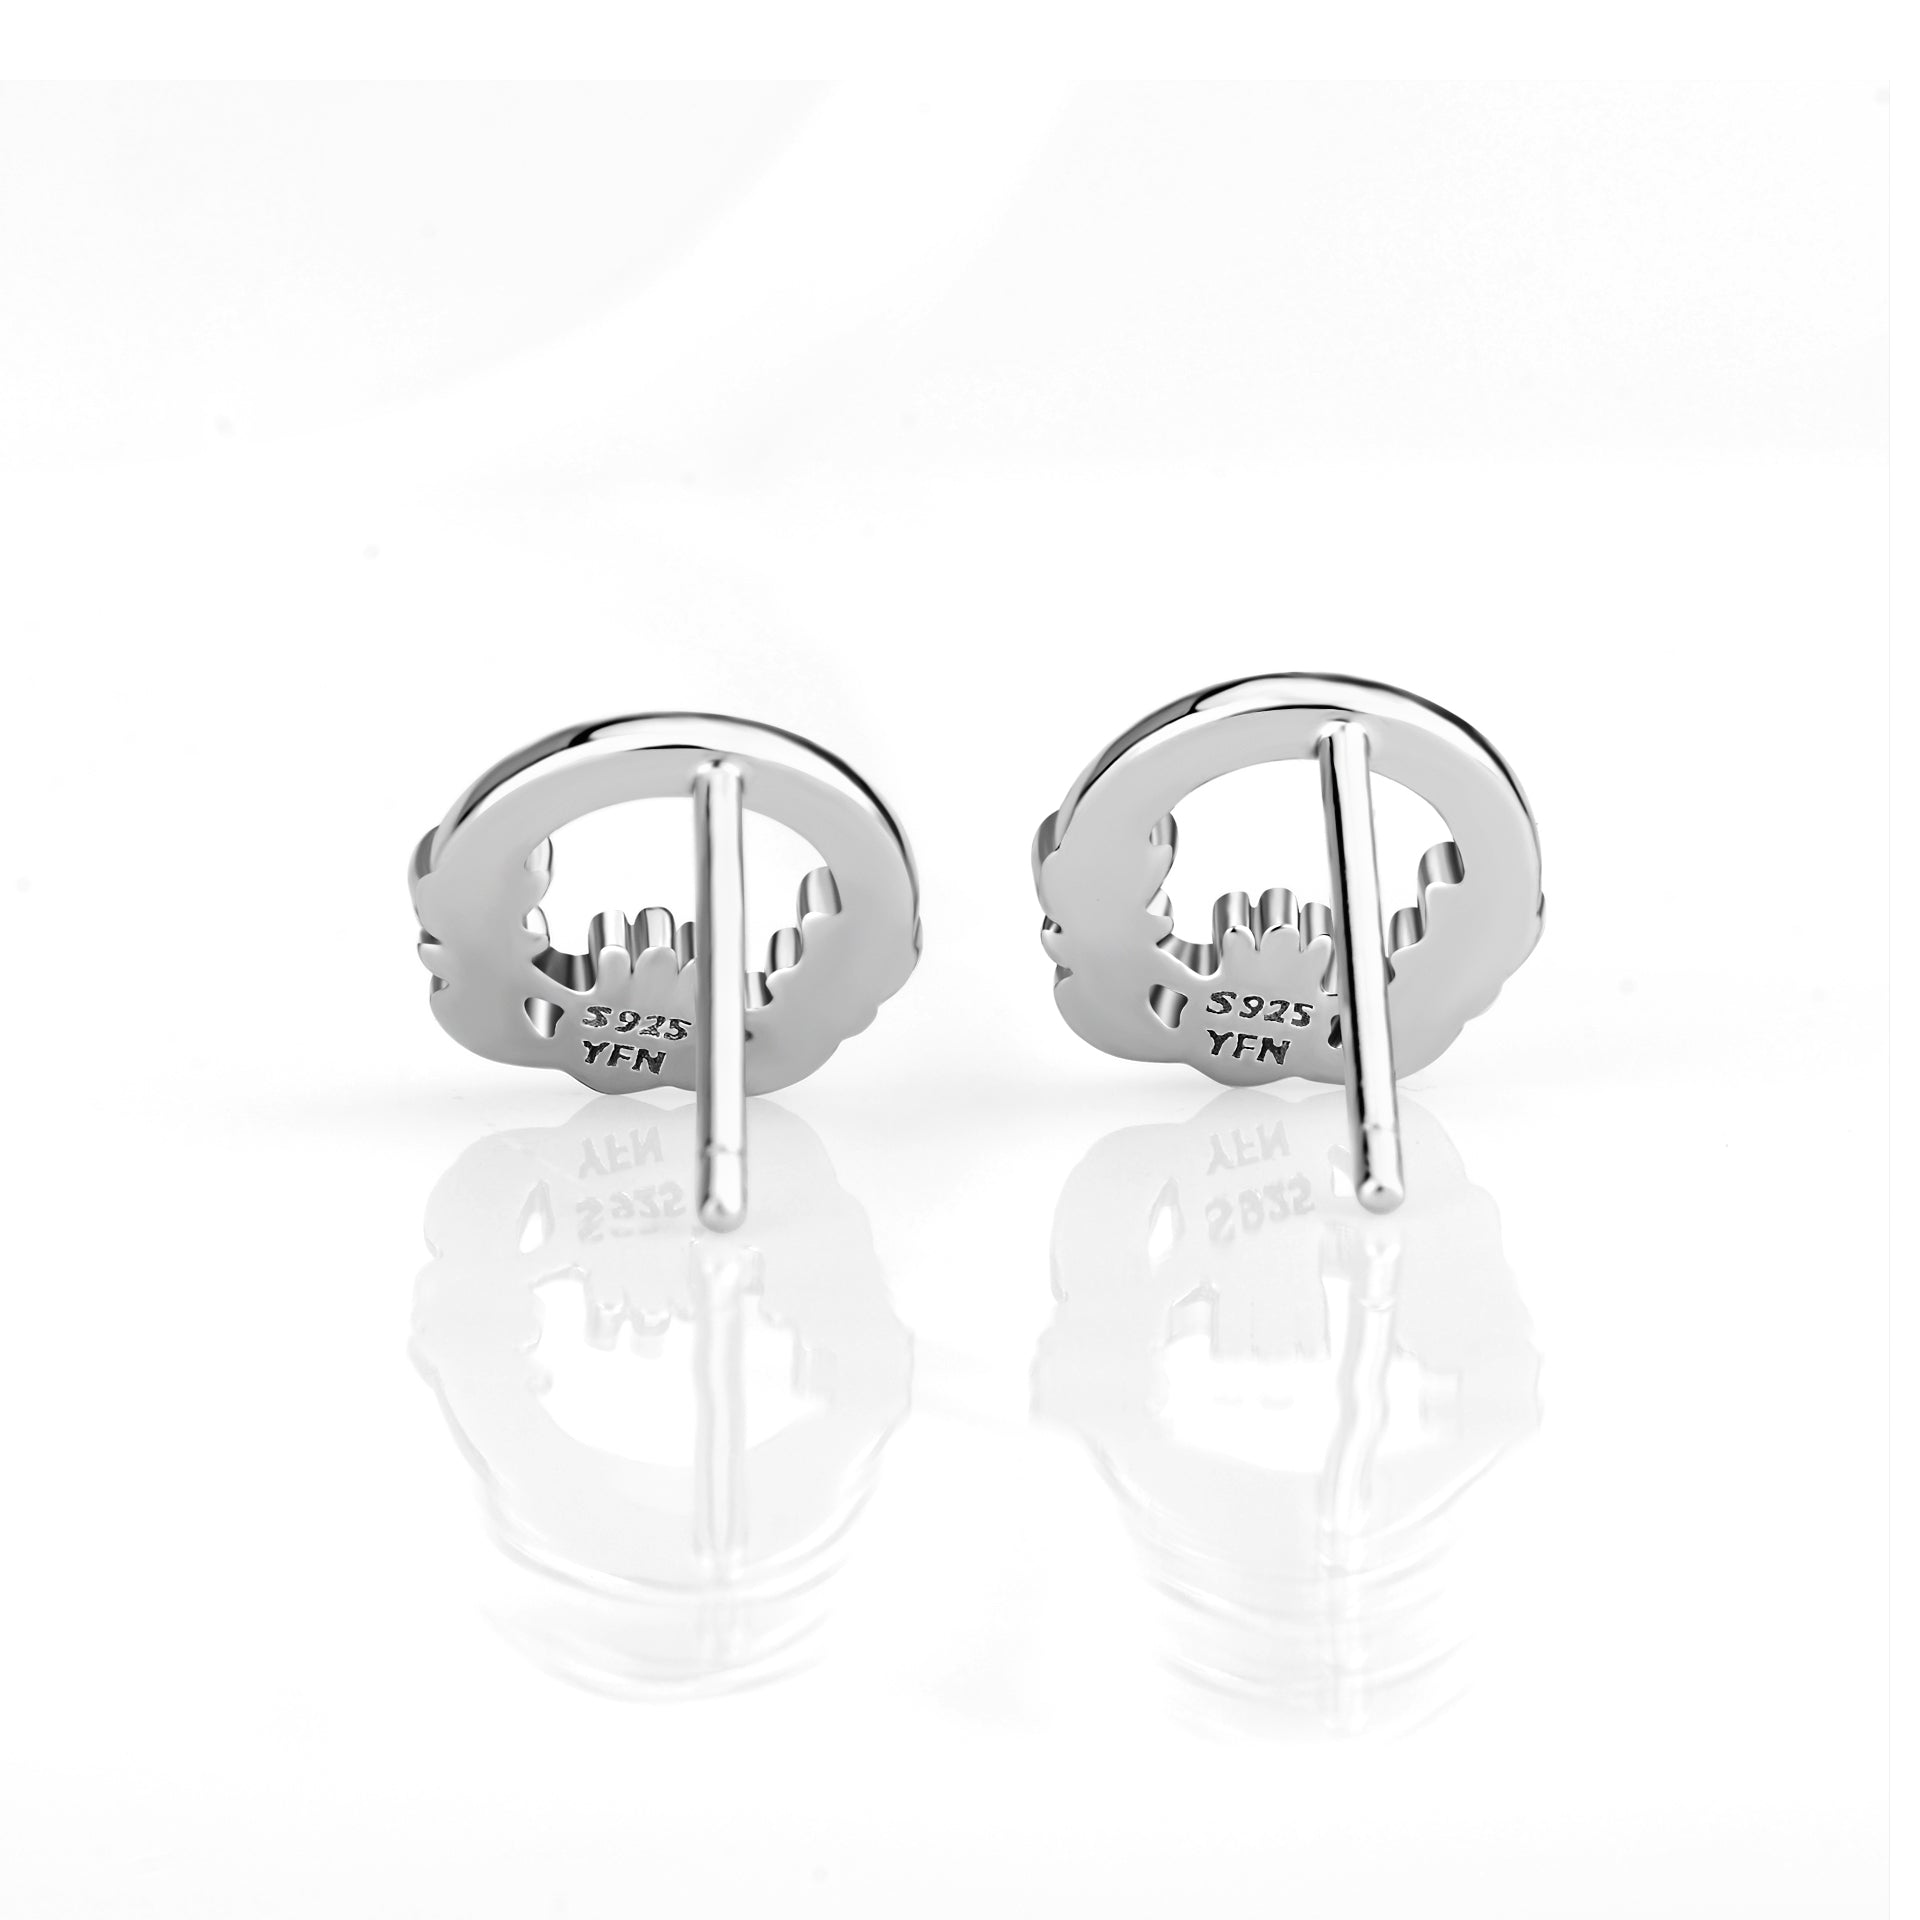 Victory Garland Design Earrings Girl Cute Gift Silver Earring Wholesale